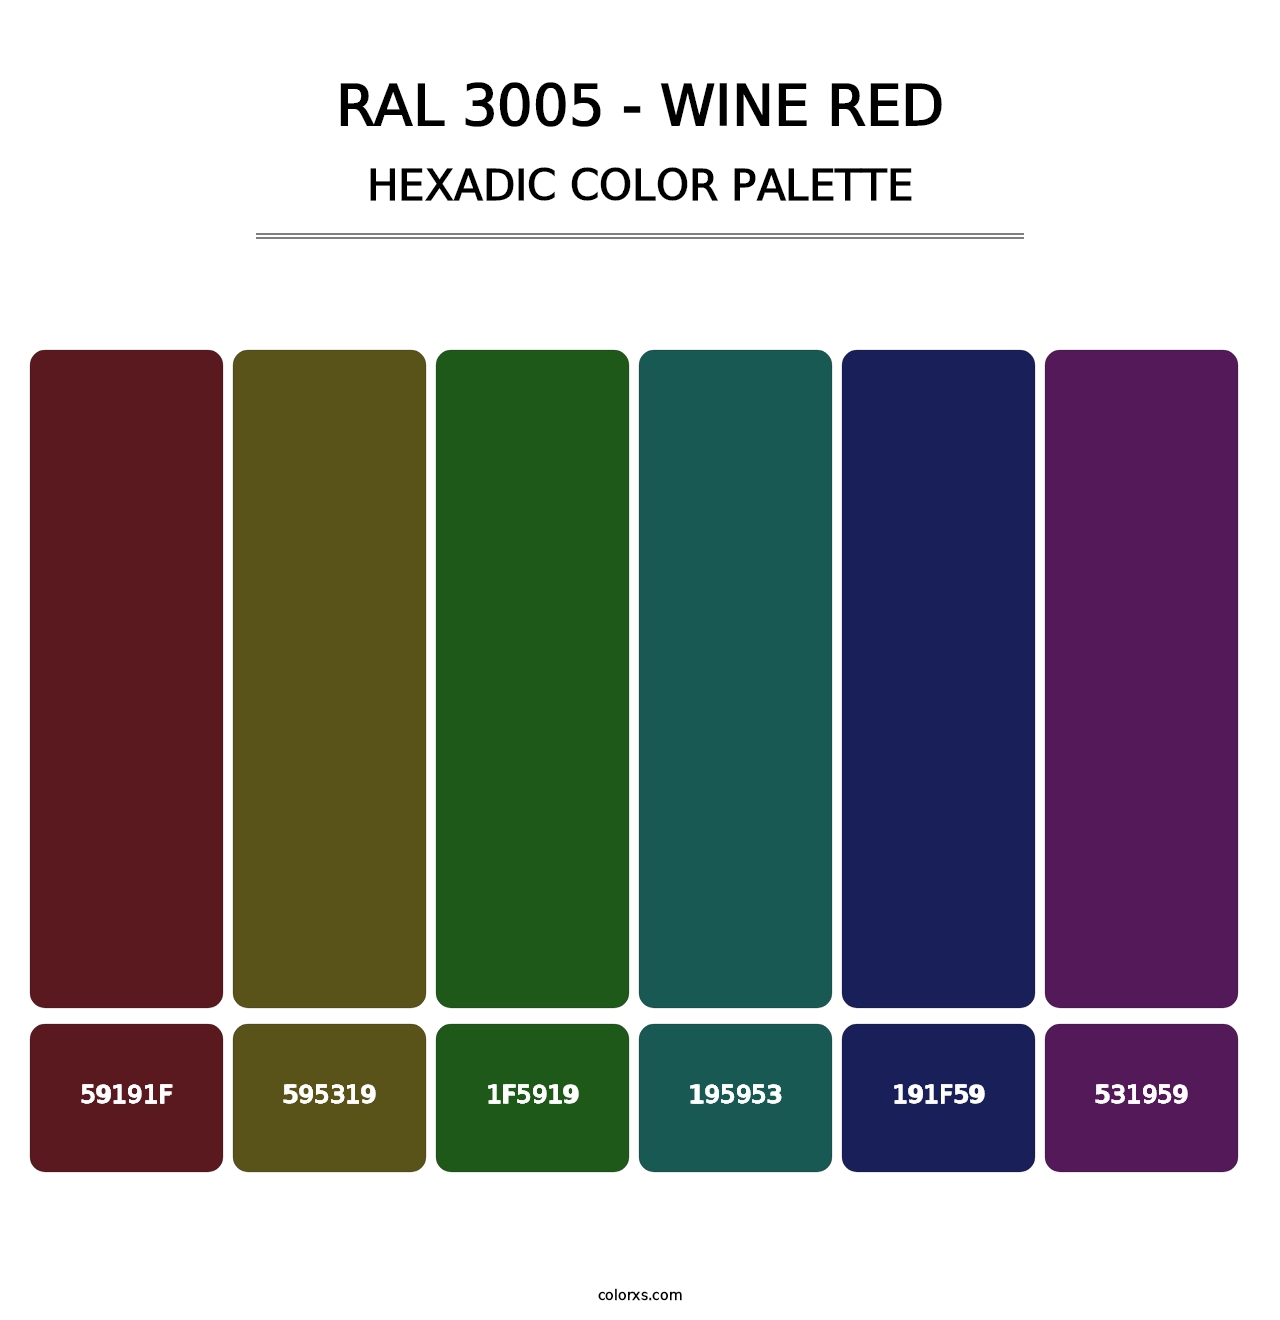 RAL 3005 - Wine Red - Hexadic Color Palette